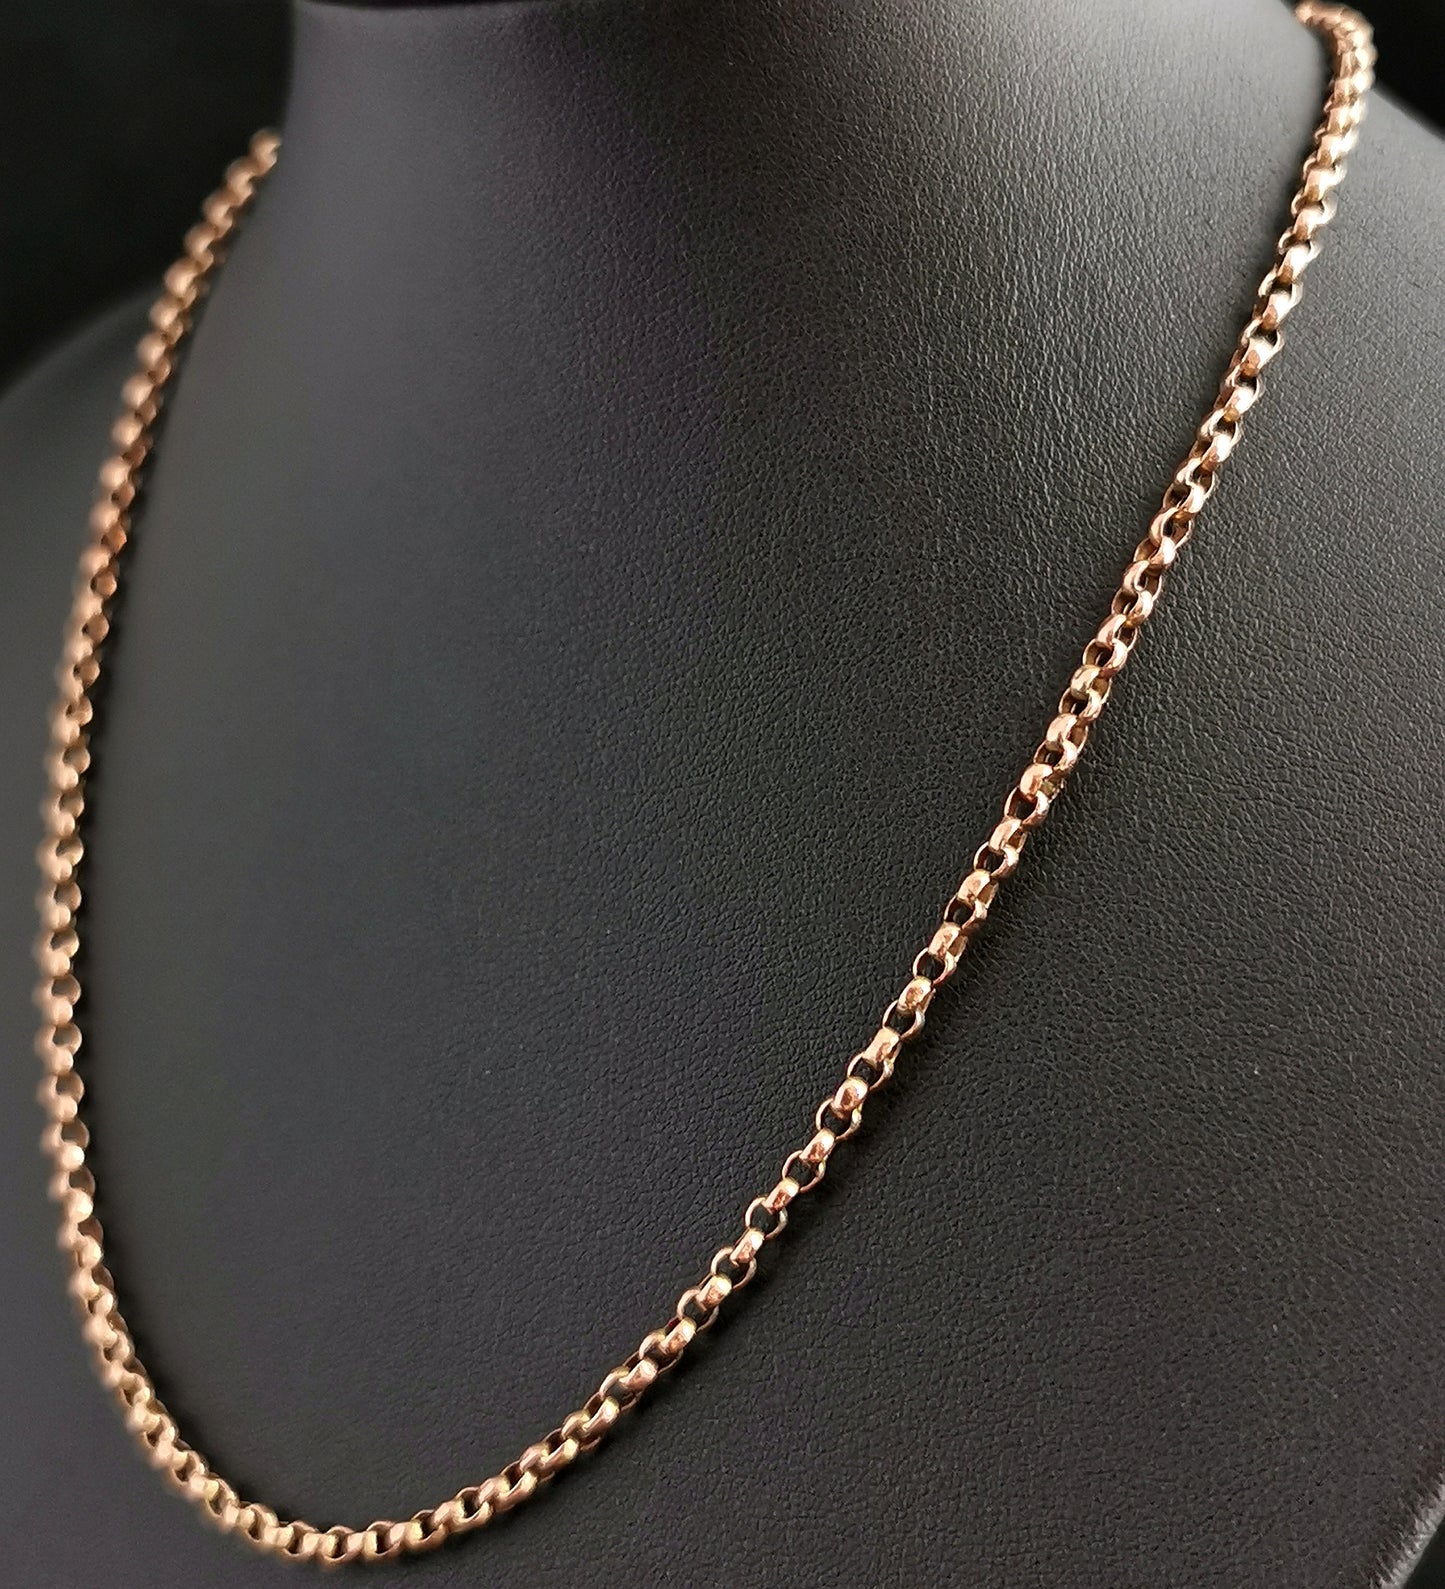 Antique 9ct Rose gold Belcher link chain necklace